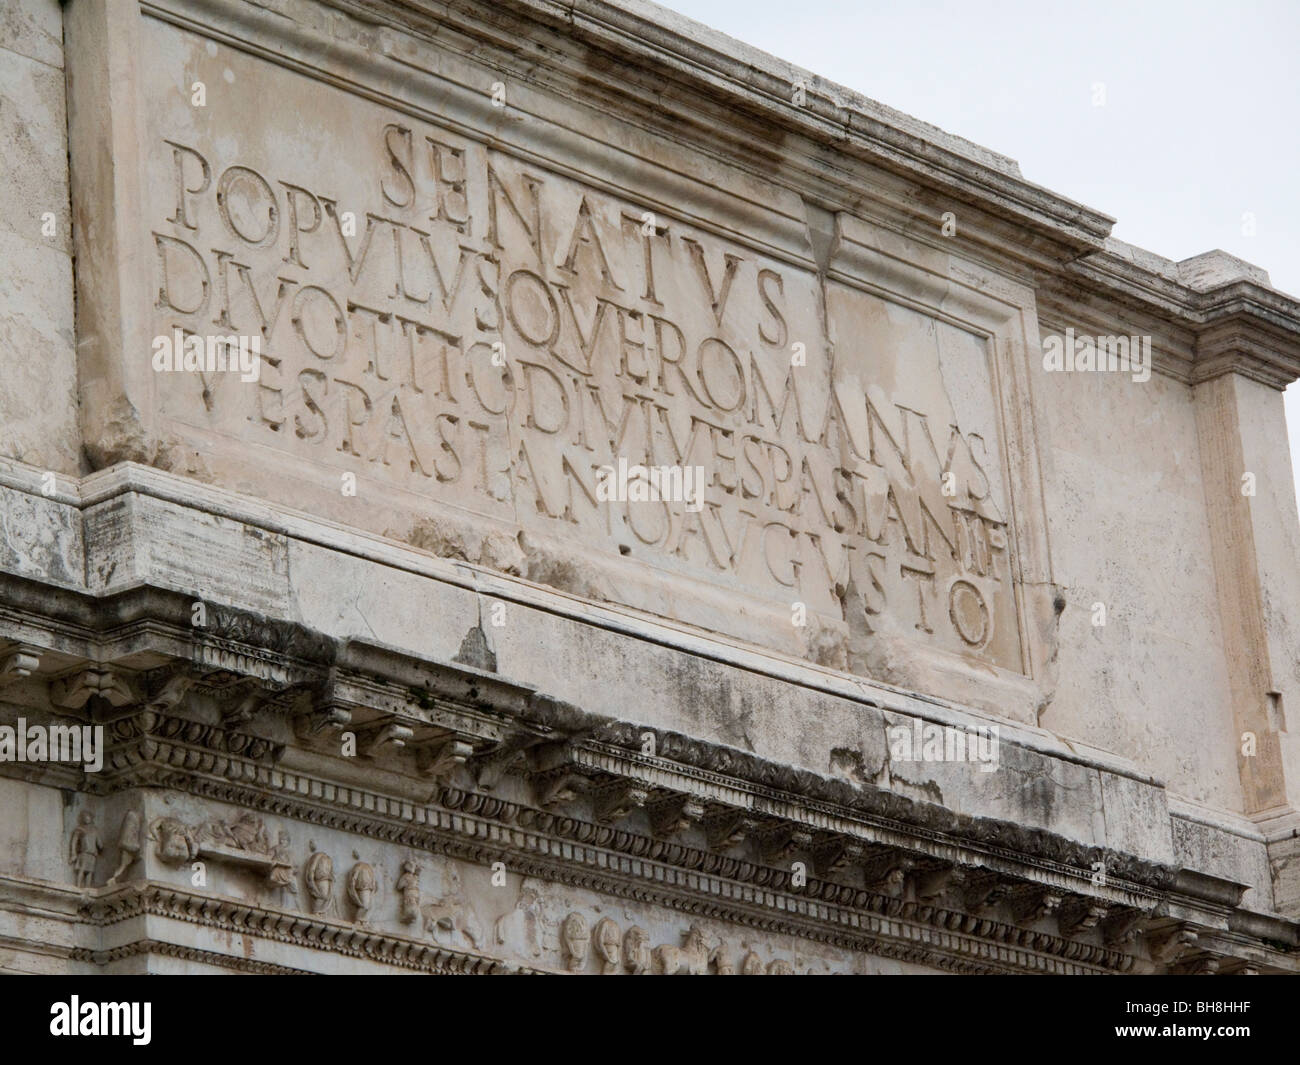 SPQR Senatus Populusque Romanus inscription on triumphal arch in Rome Lazio Italy Stock Photo